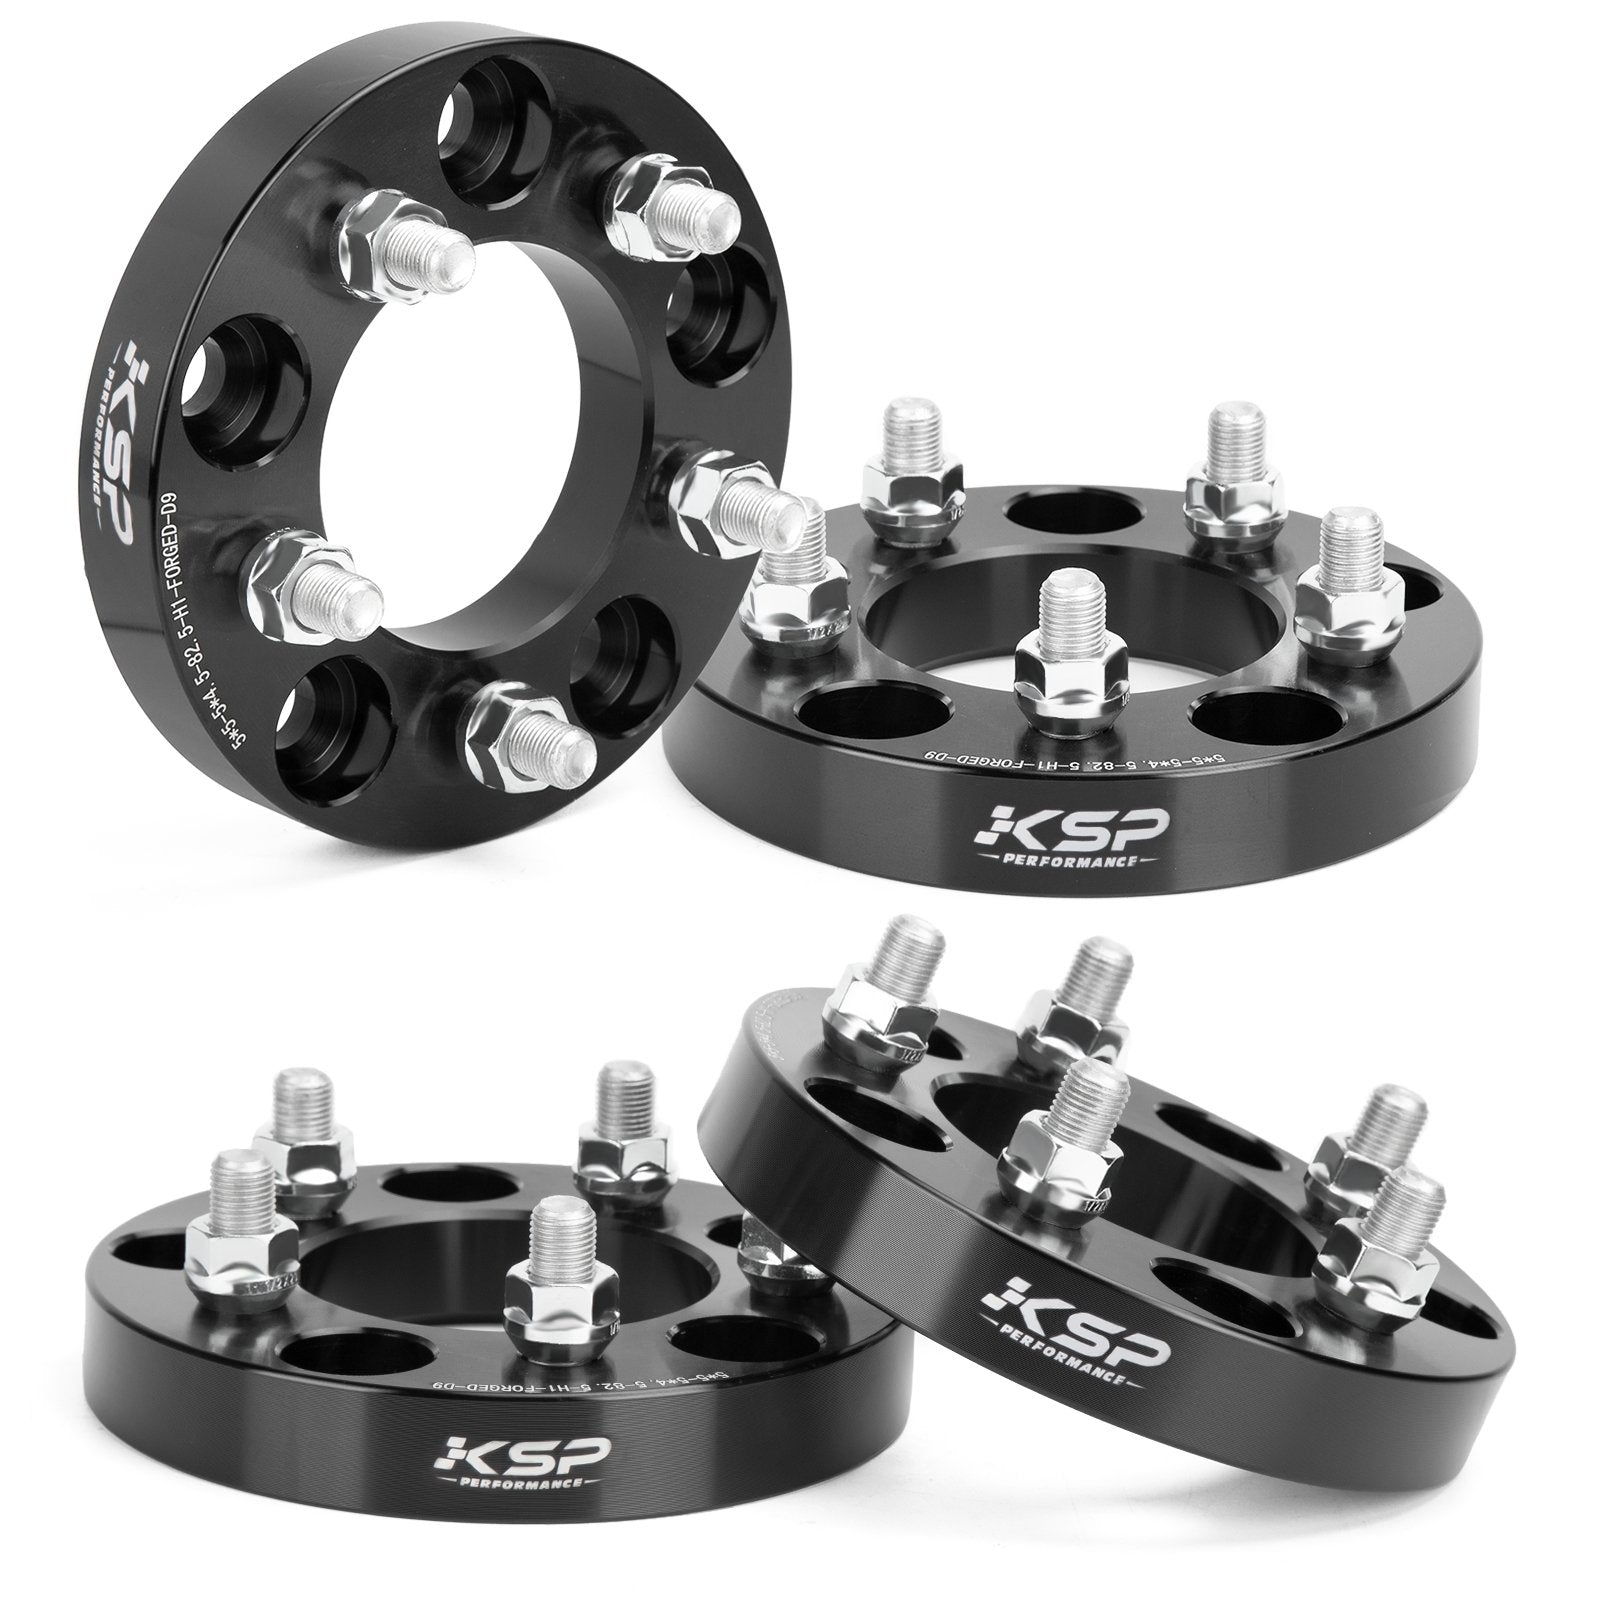 Wheel Adapters 5x5 to 5x4.5 for Jeep YJ TJ ZJ XJ KJ KK MK Wheels on WJ WK JK/JKU xccscss.